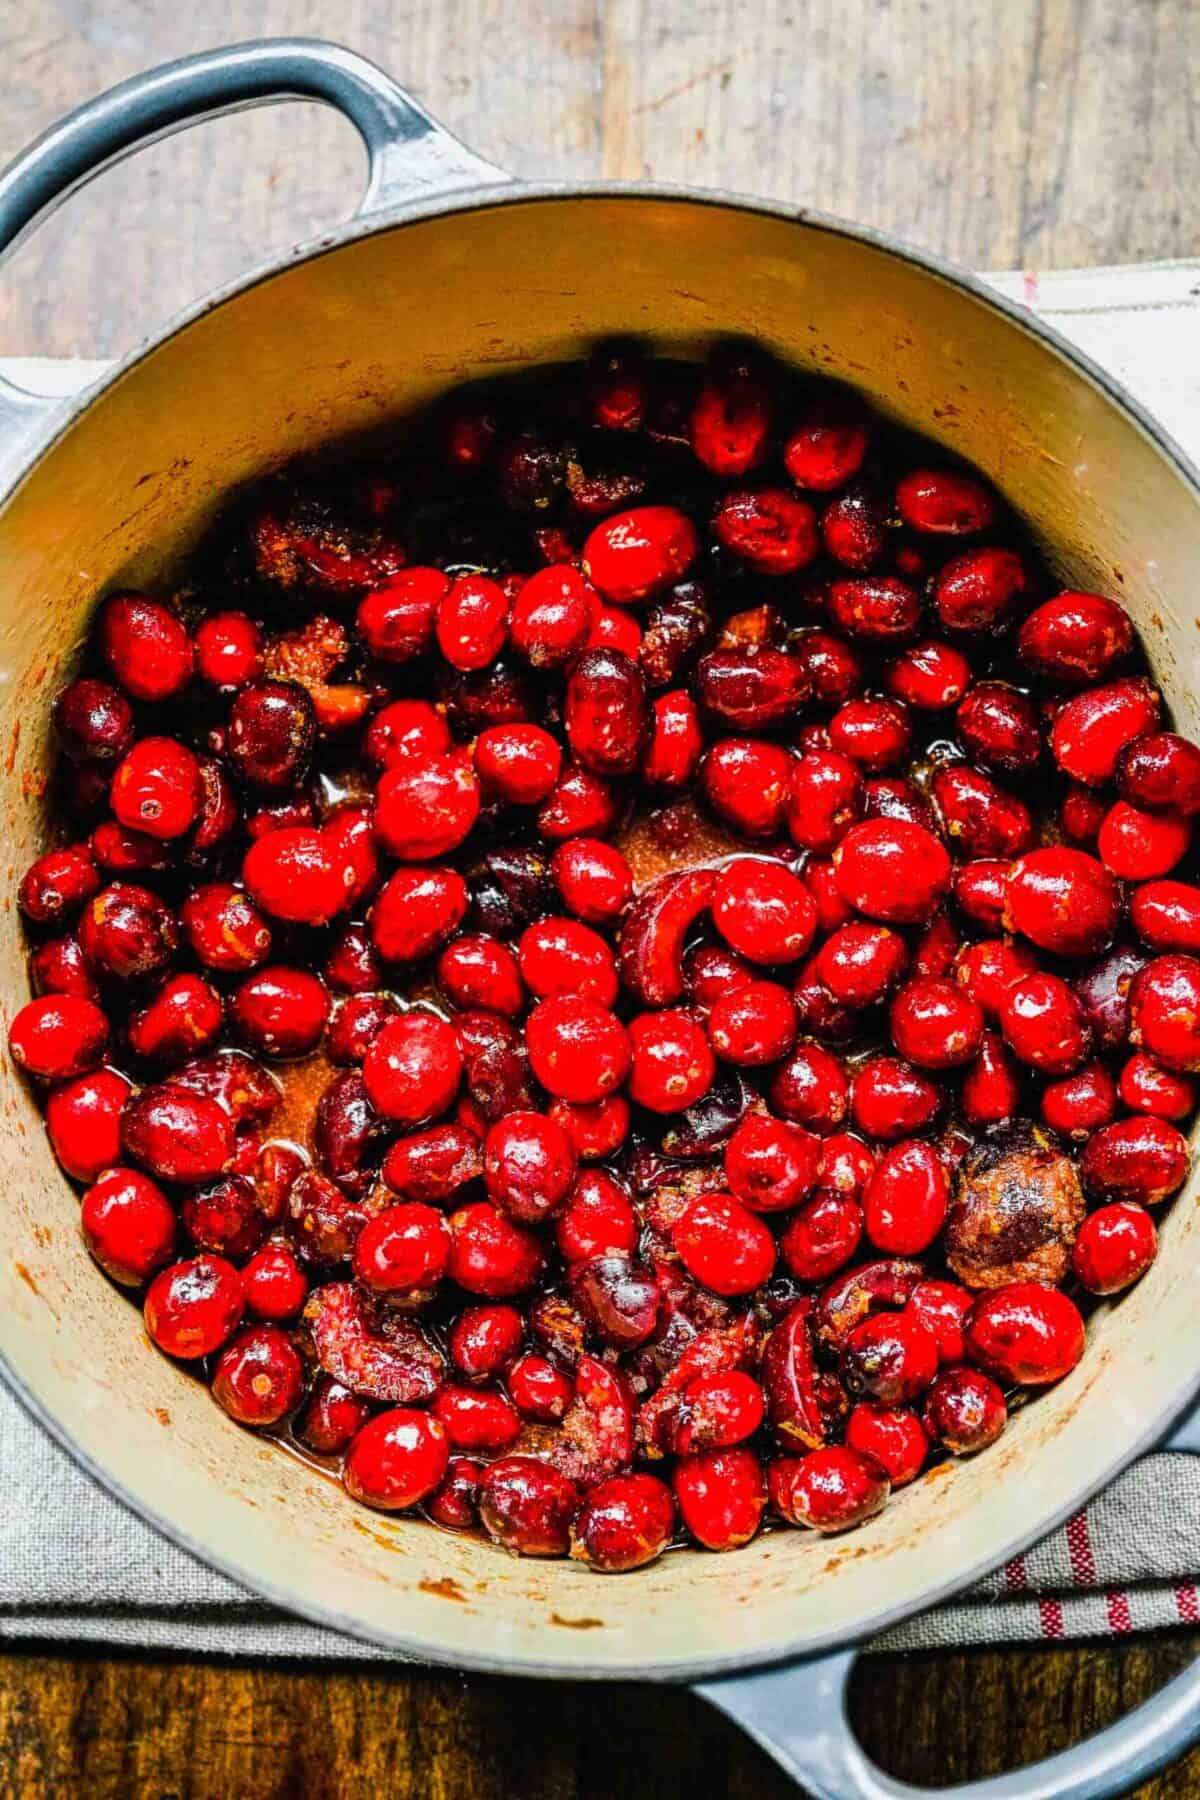 Cranberries and cherries cooking in a pot with brown sugar, orange juice, and orange zest